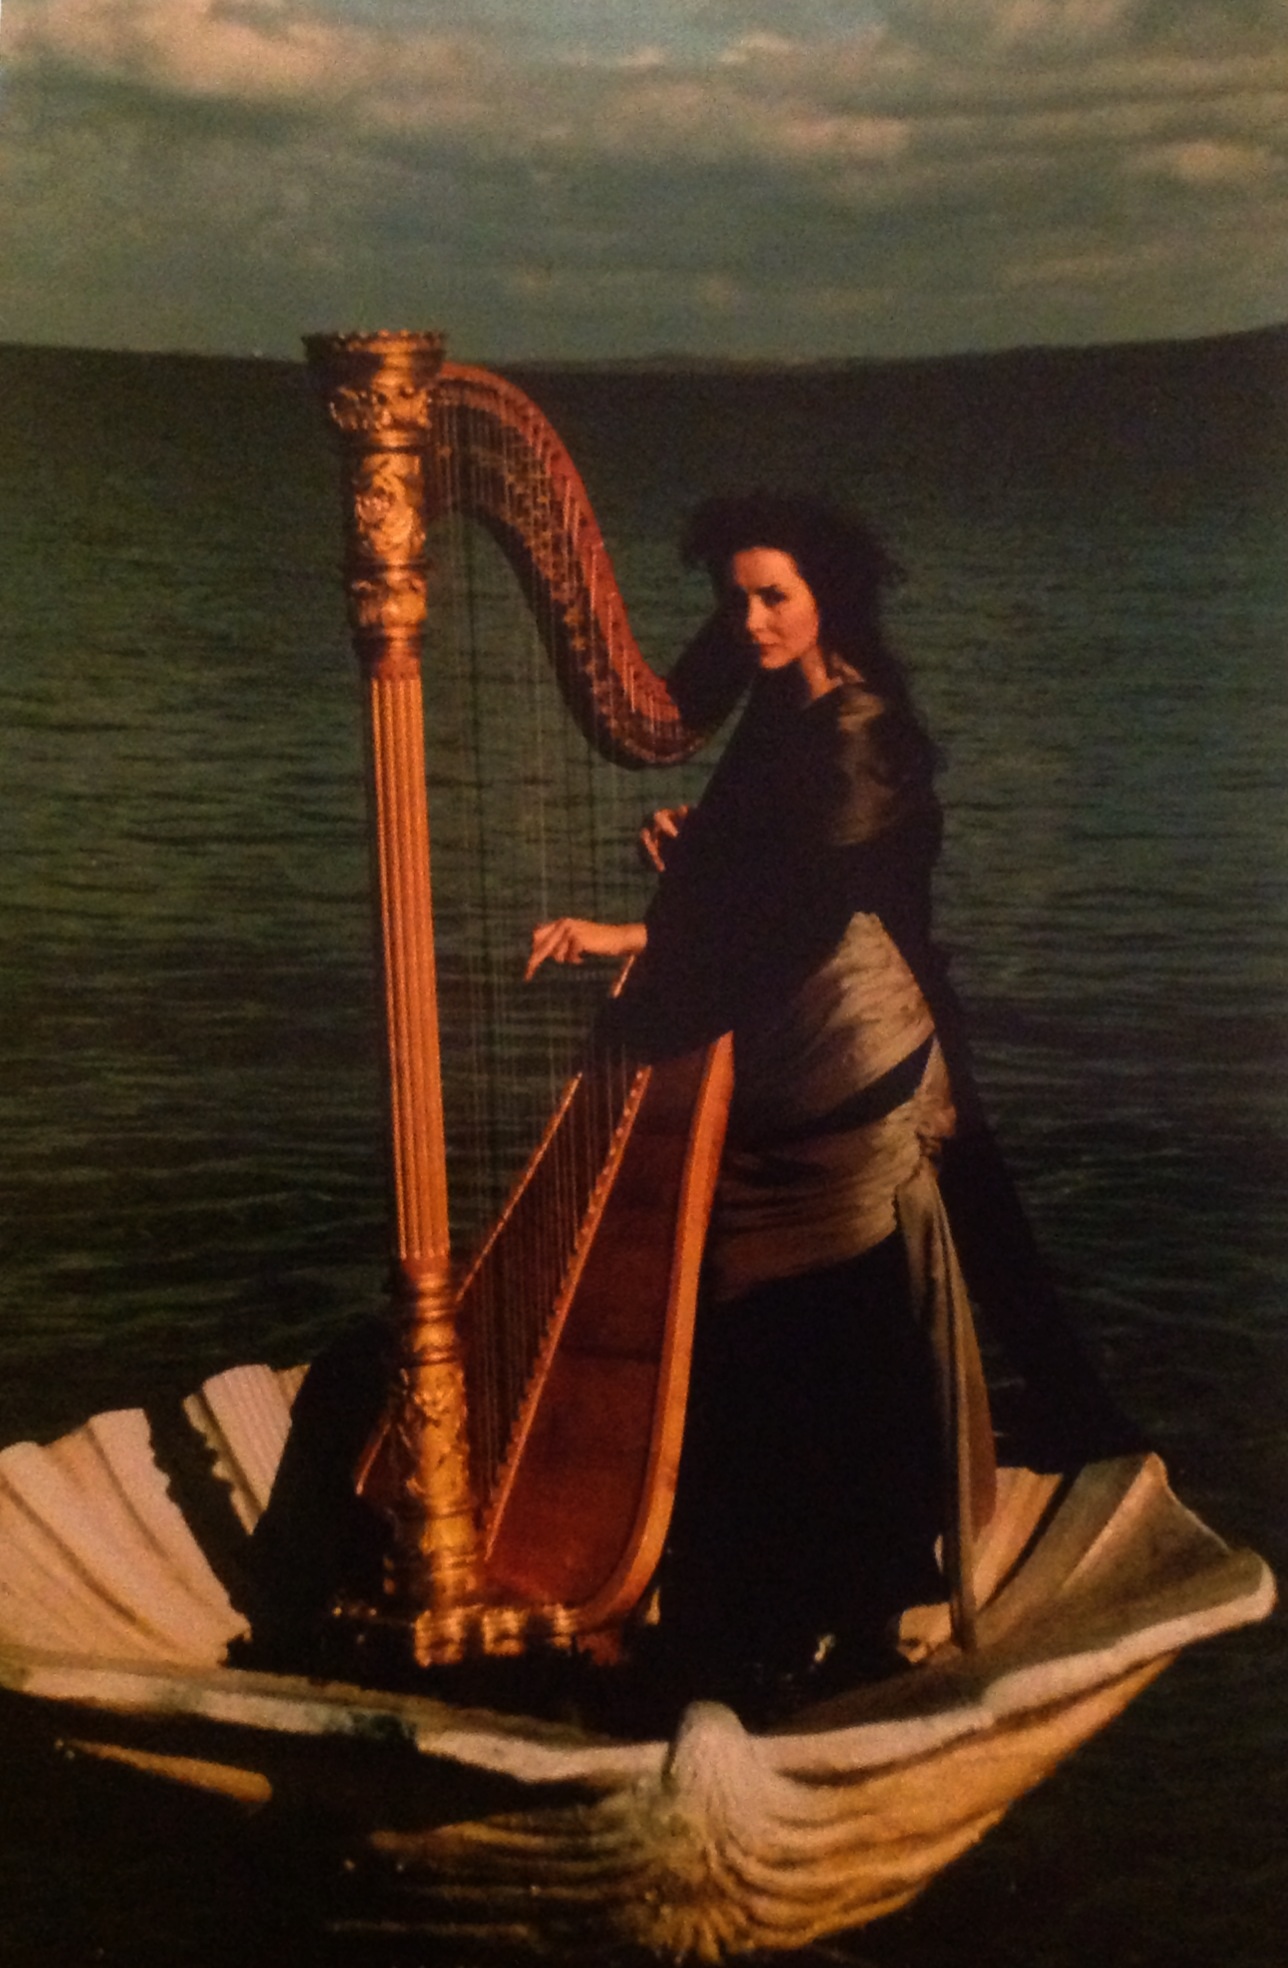 Geraldine O'Rawe in The Harpist